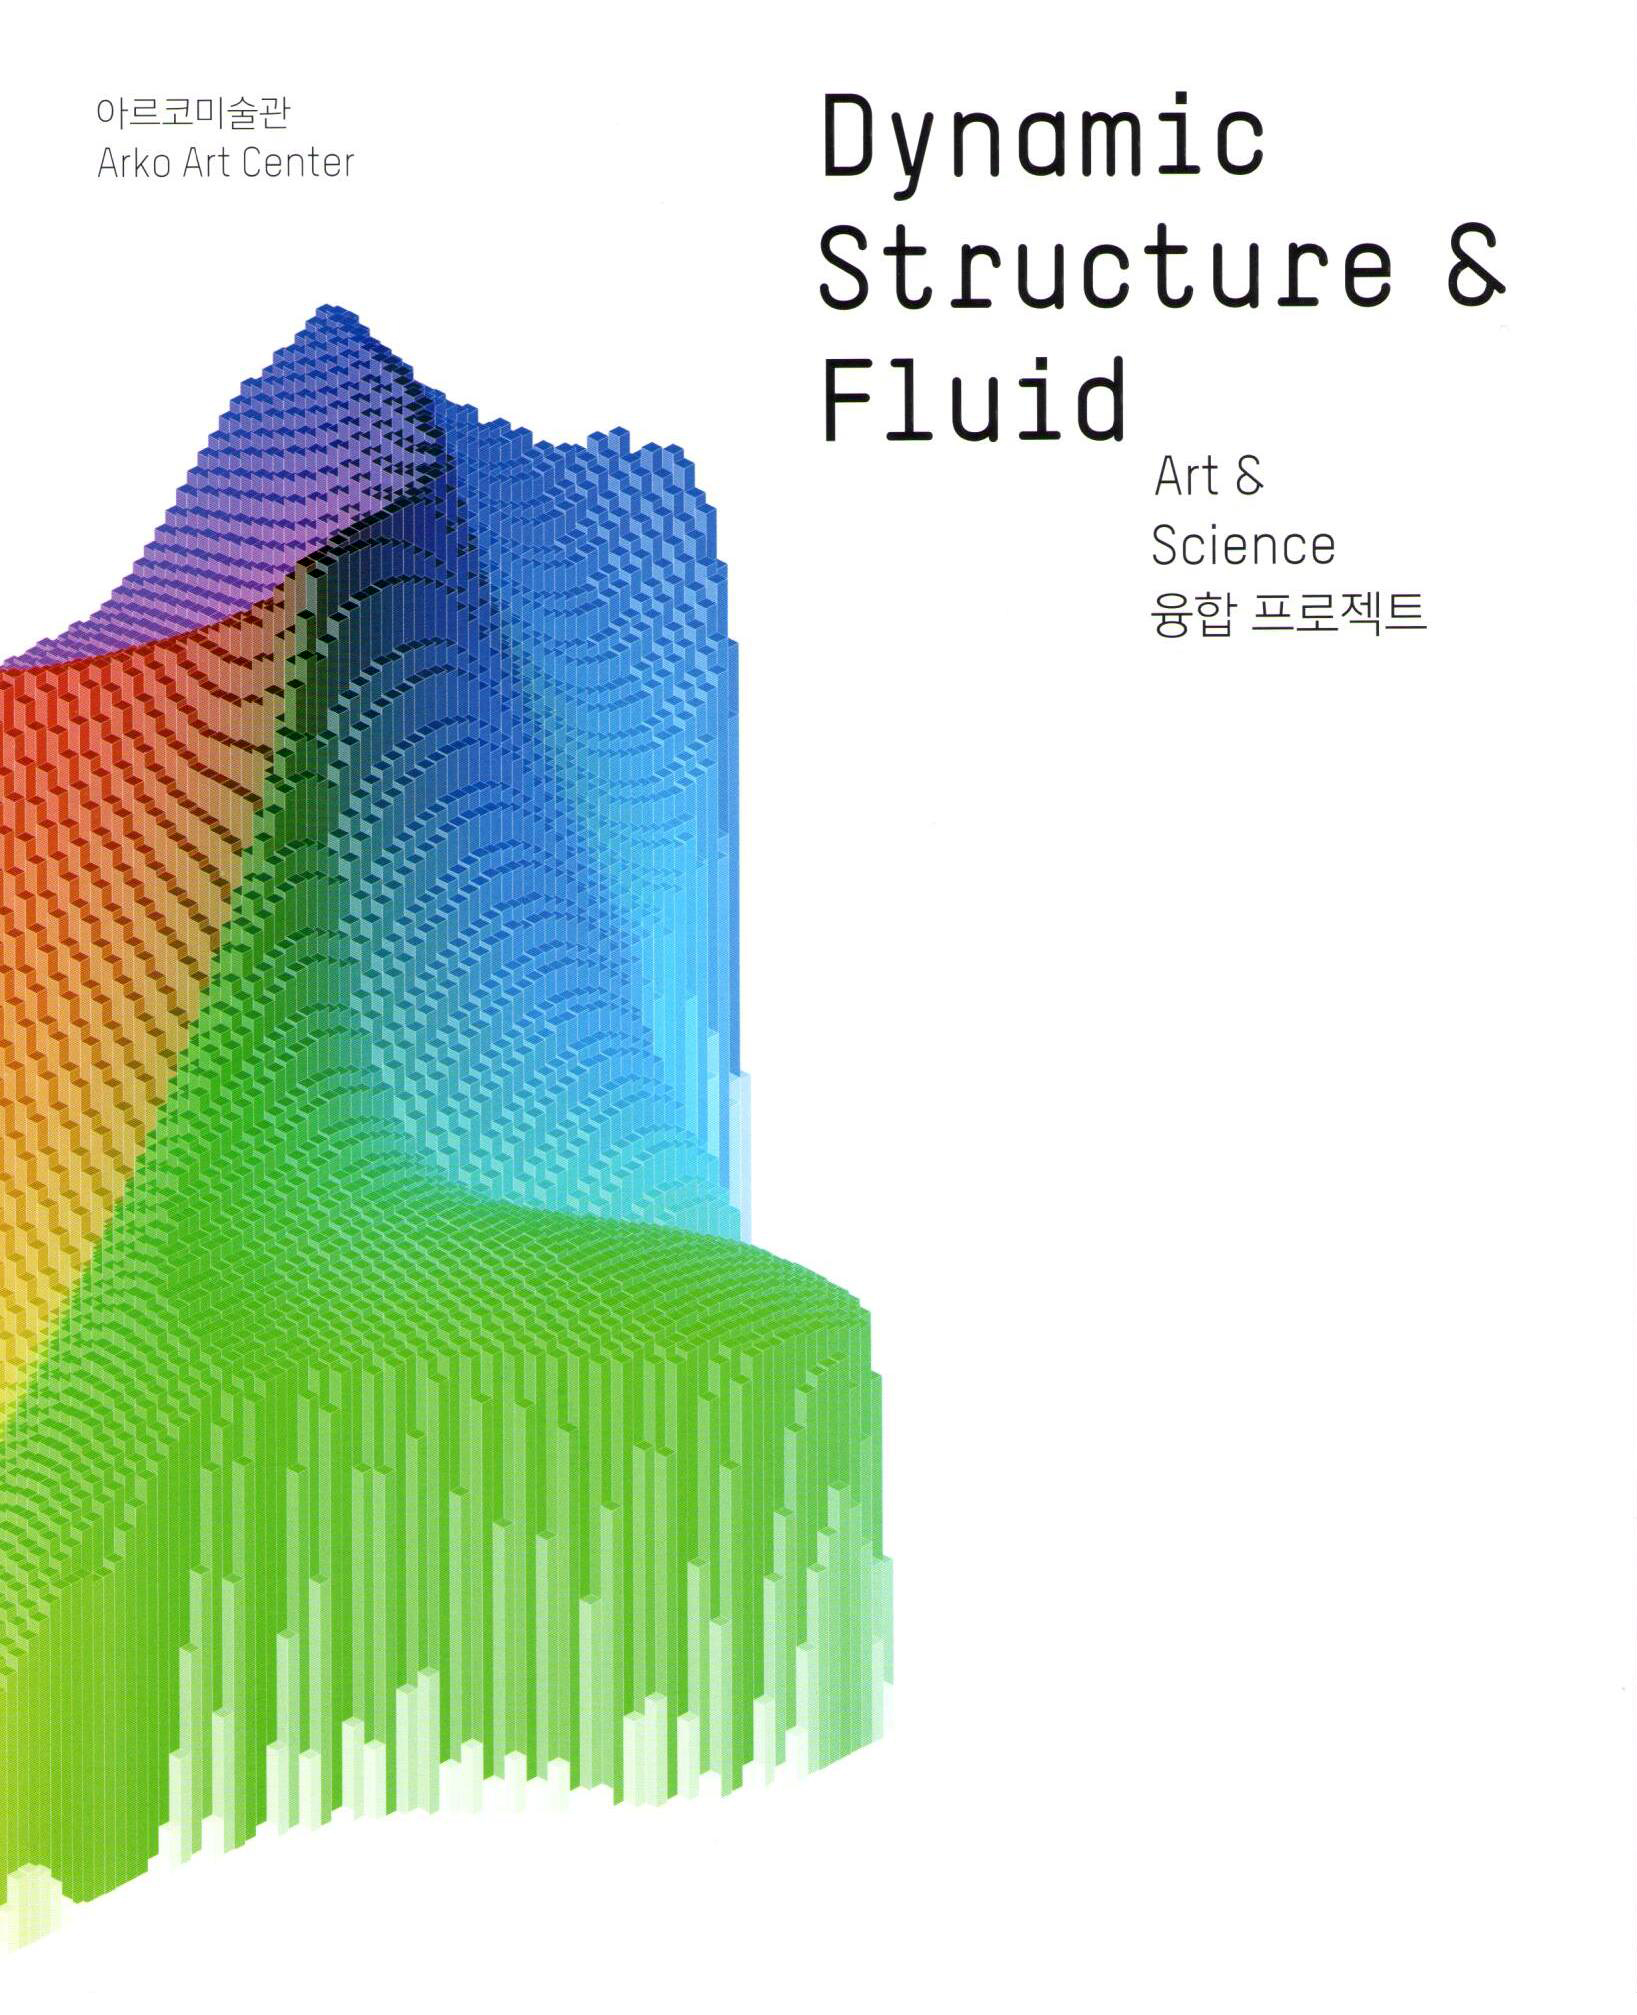 Dynamic Structure & Fluid: Art & Science 융합 프로젝트